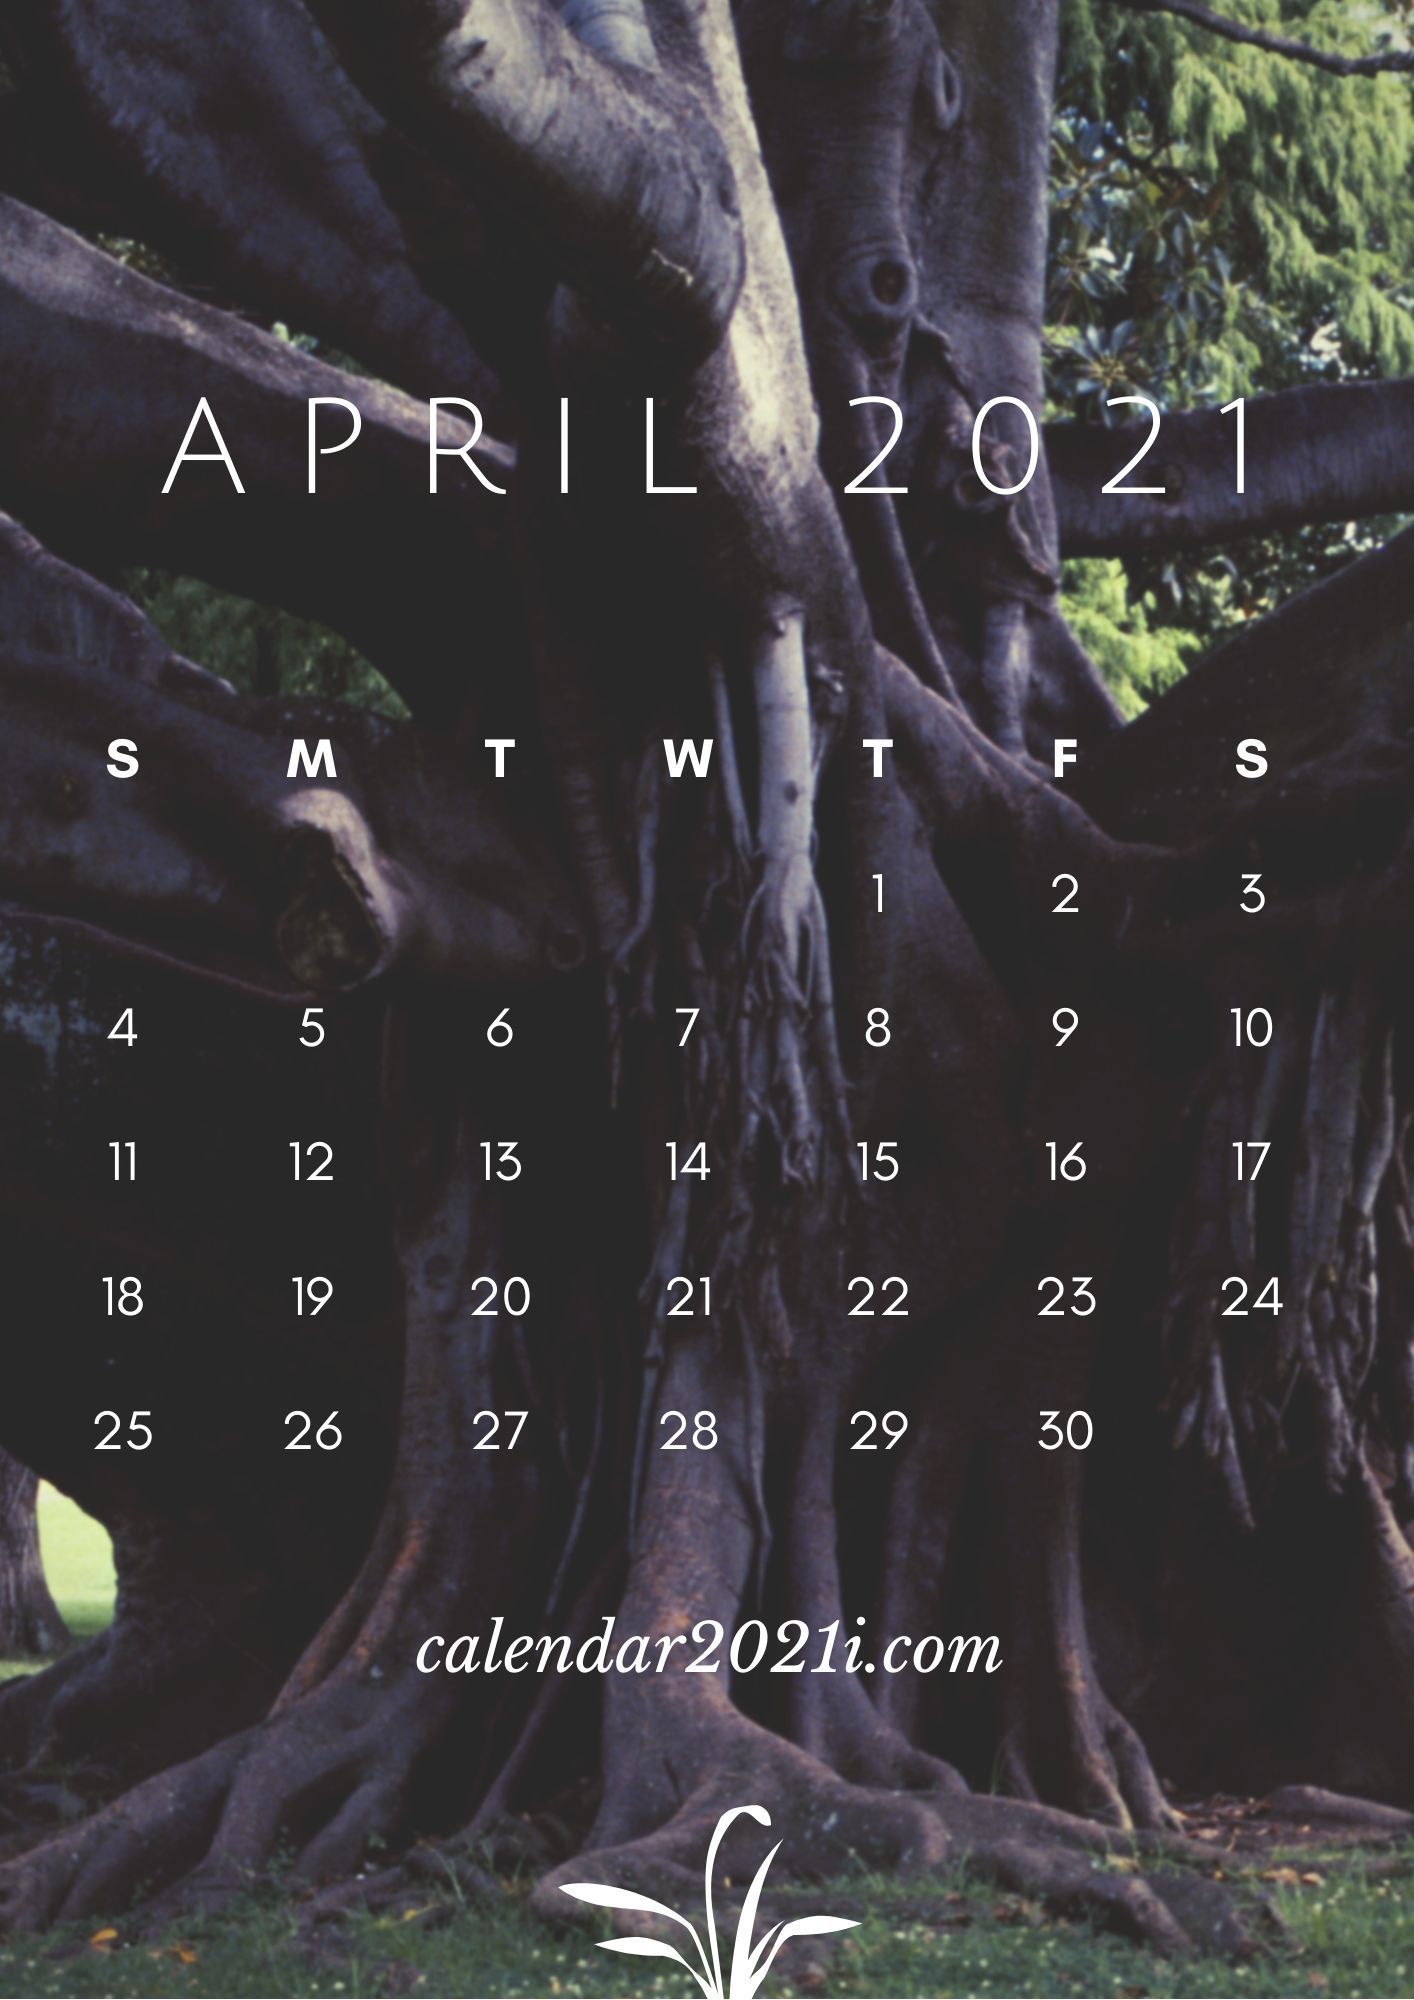 April Calendar 2021 HD Wallpaper for Apple iPhone background. Calendar wallpaper, Printable calendar , 2021 calendar